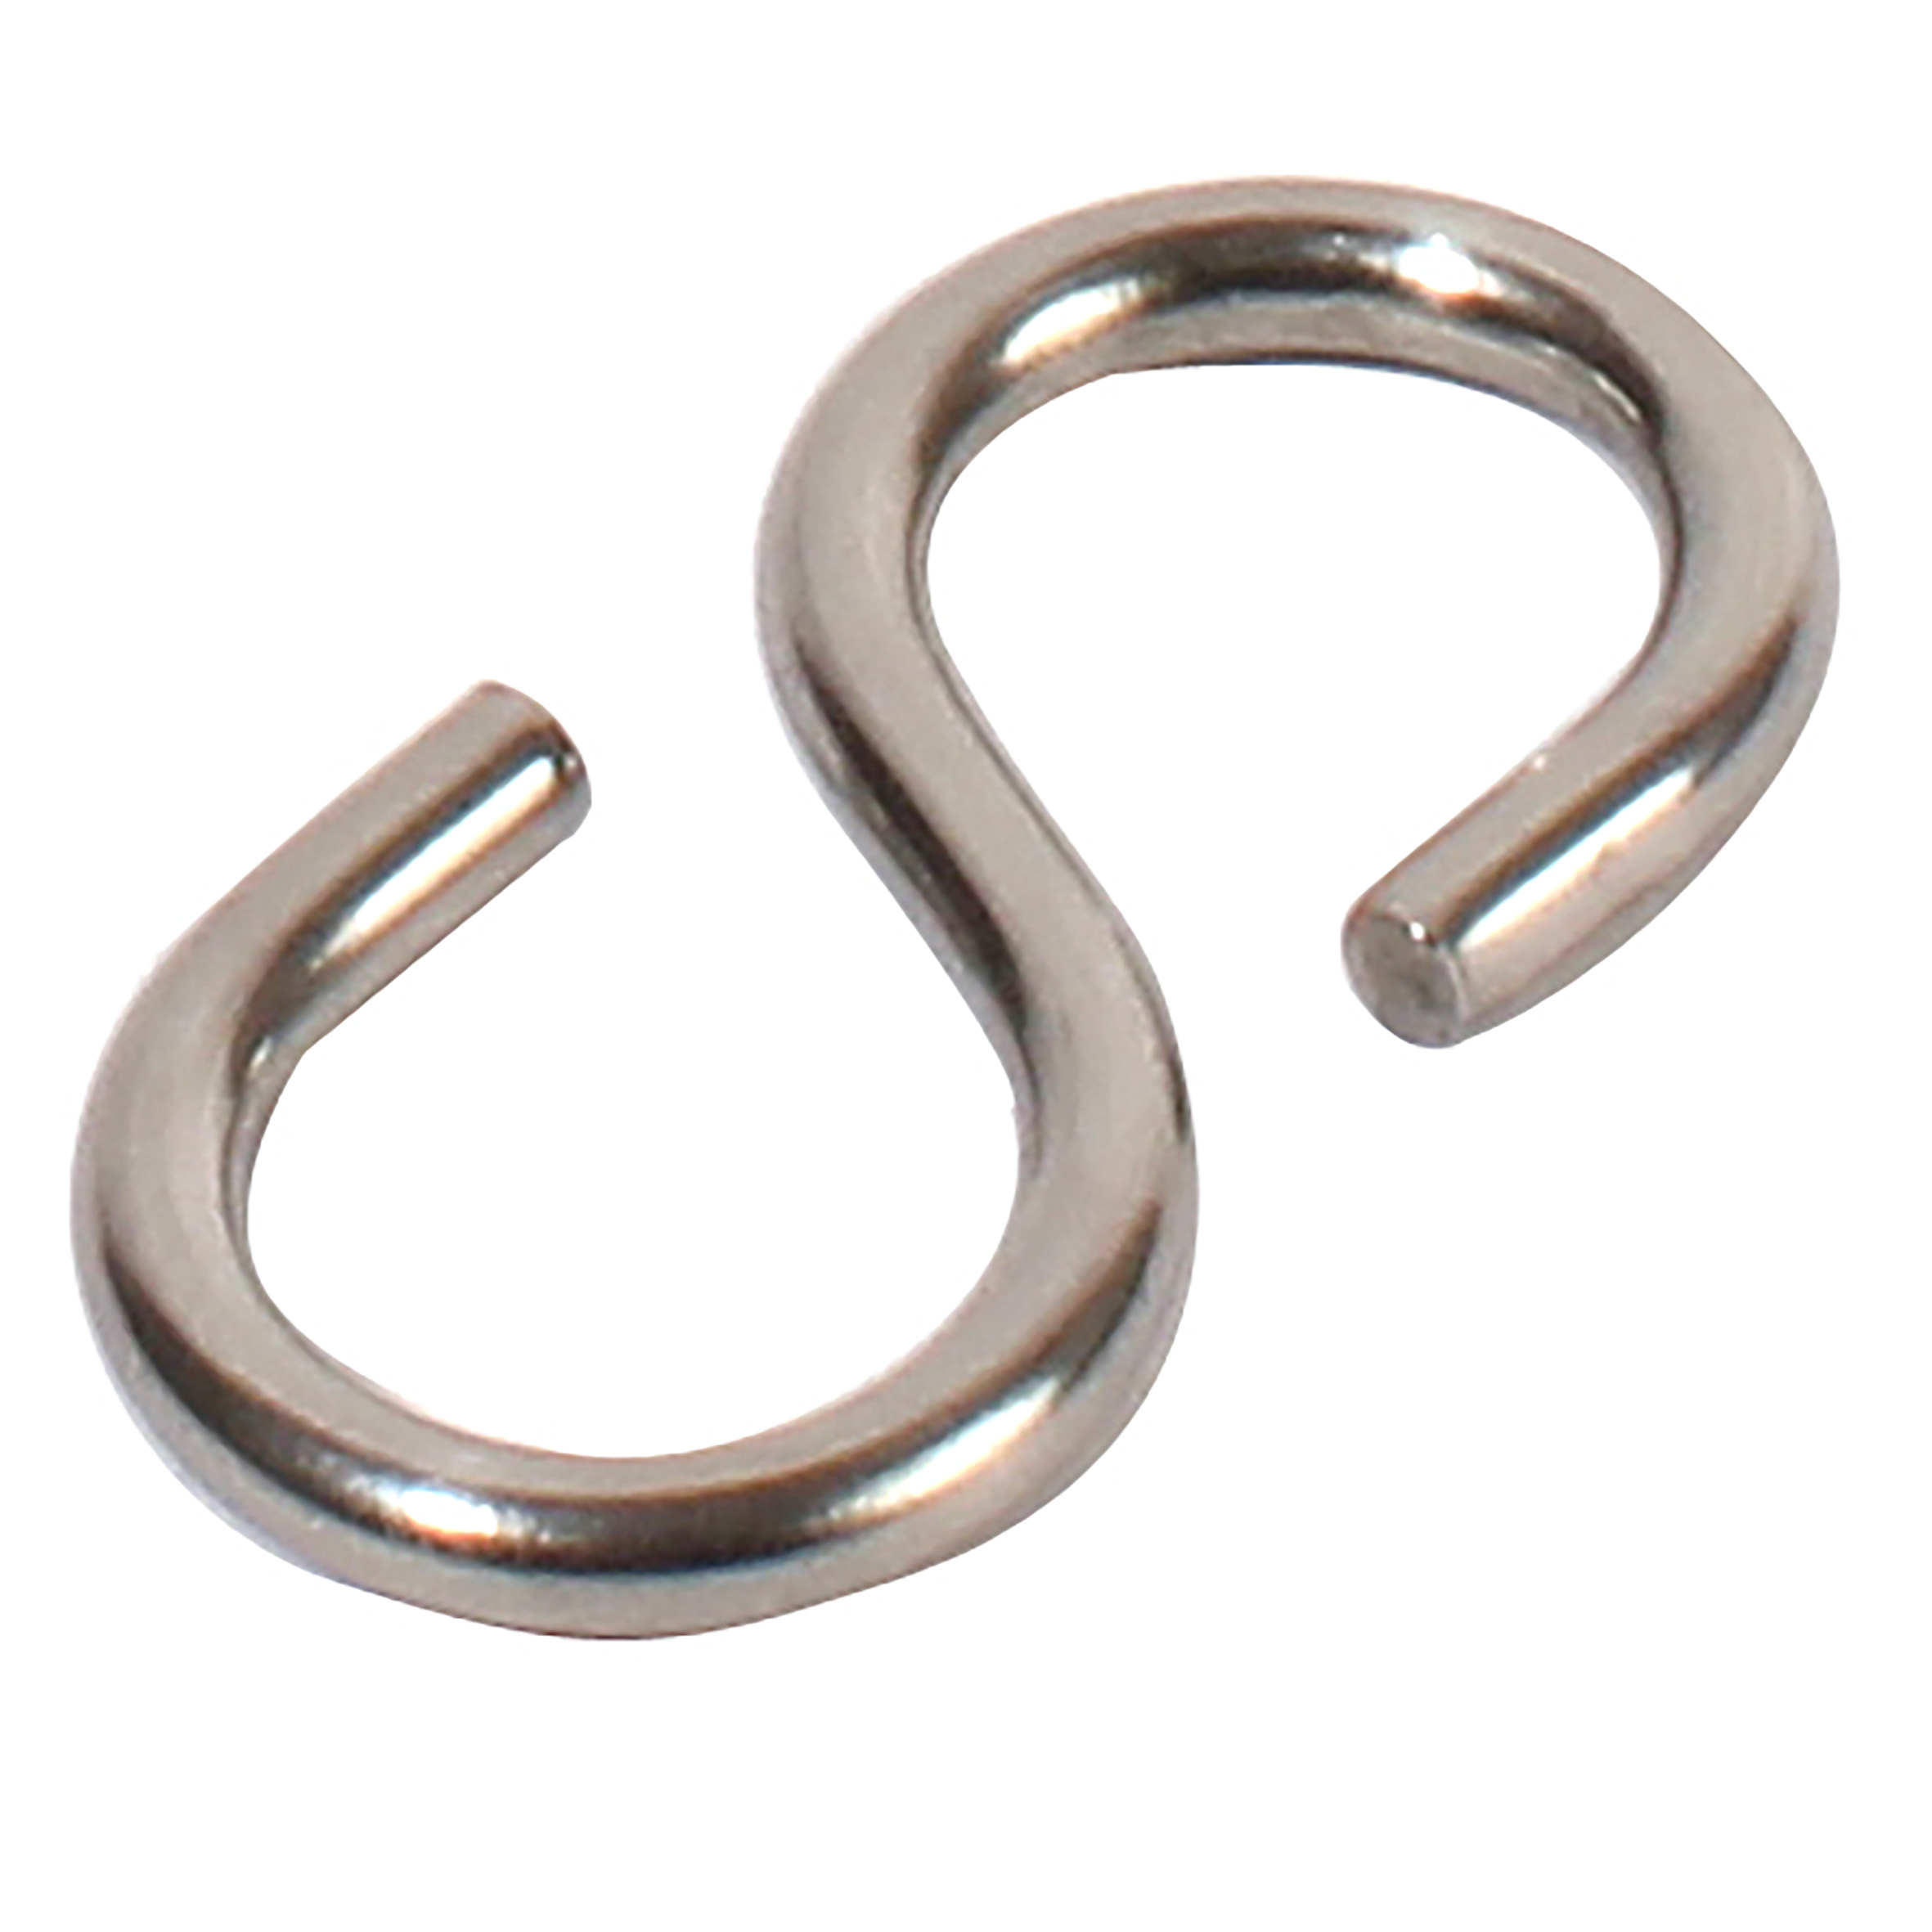 Symmetrical S shaped hook stainless steel - Stainless steel - Economy range - 